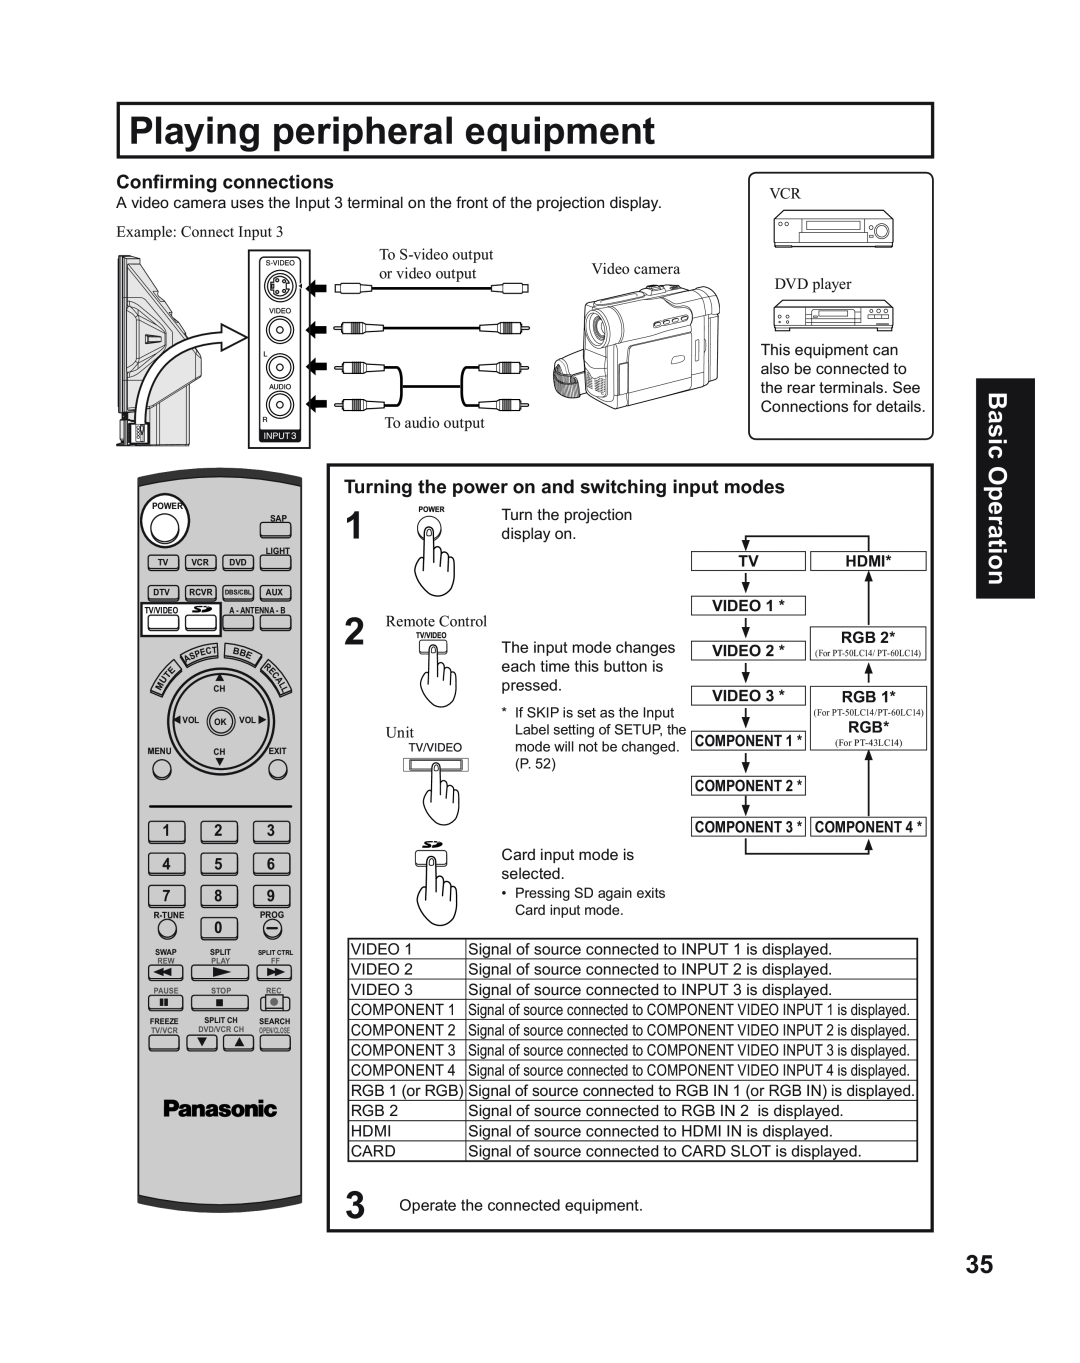 Panasonic PT-60LC14 manual Playing peripheral equipment, Basic, Operation, Conﬁrming connections, 1 2 4 5 7 8, Hdmi Rgb 